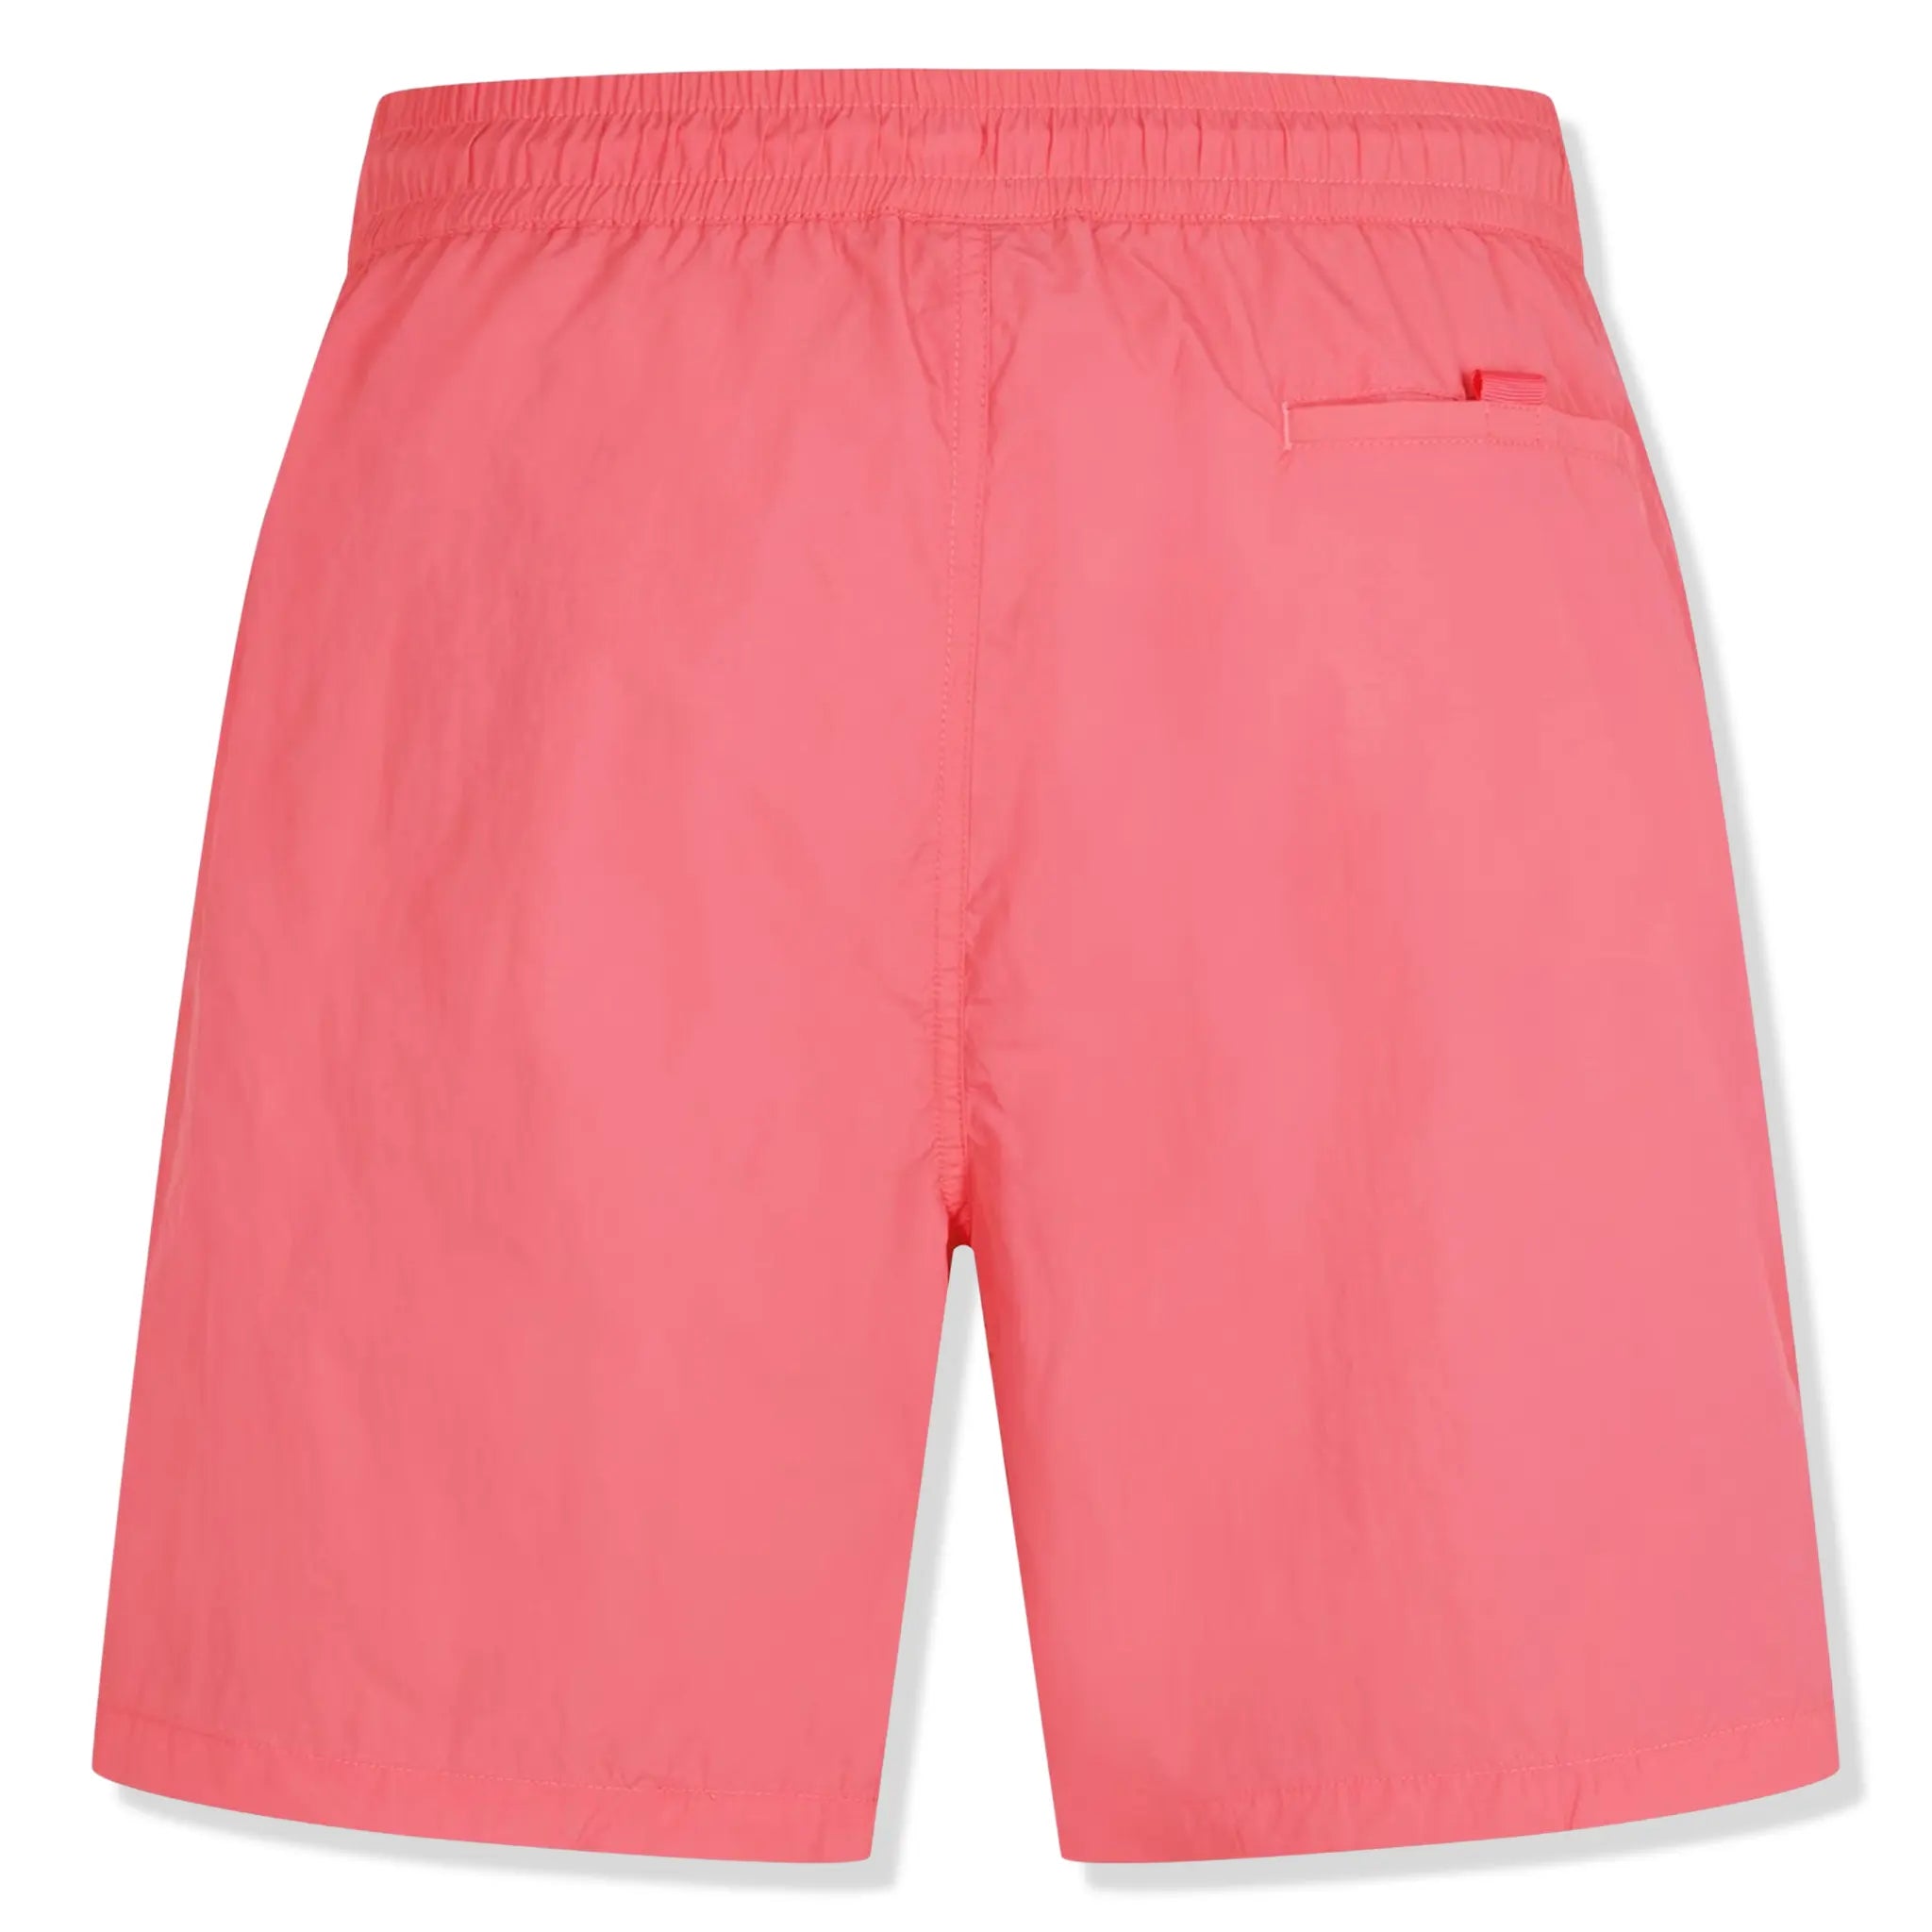 Back view of Icecream IC Run Dog Pink Swim Shorts ic23214-pnk